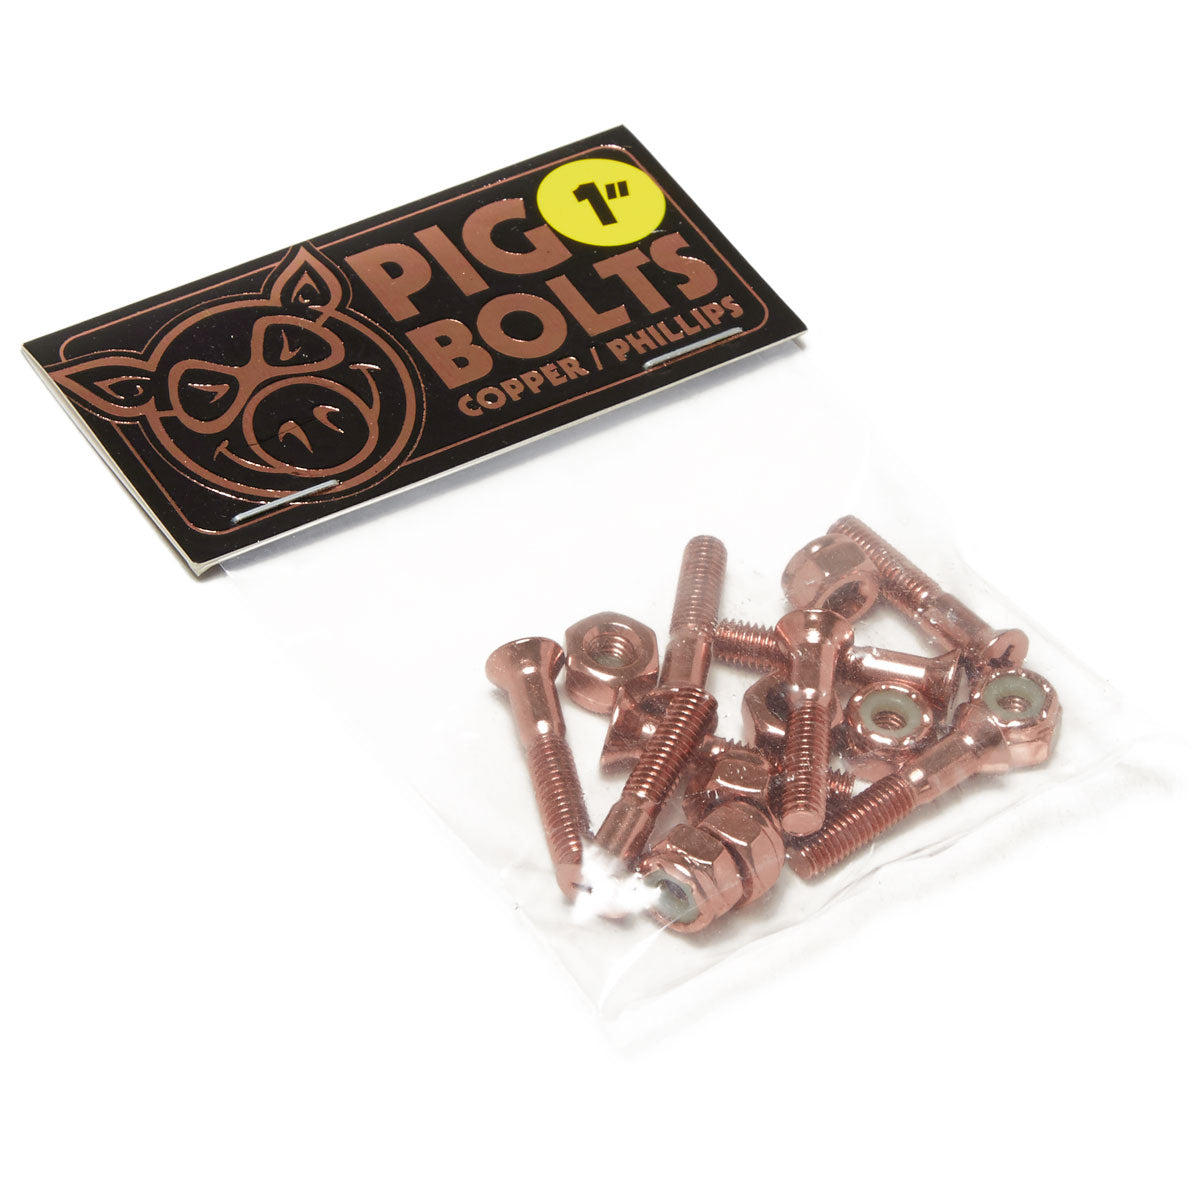 Pig G Copper Hardware - Phillips - 1